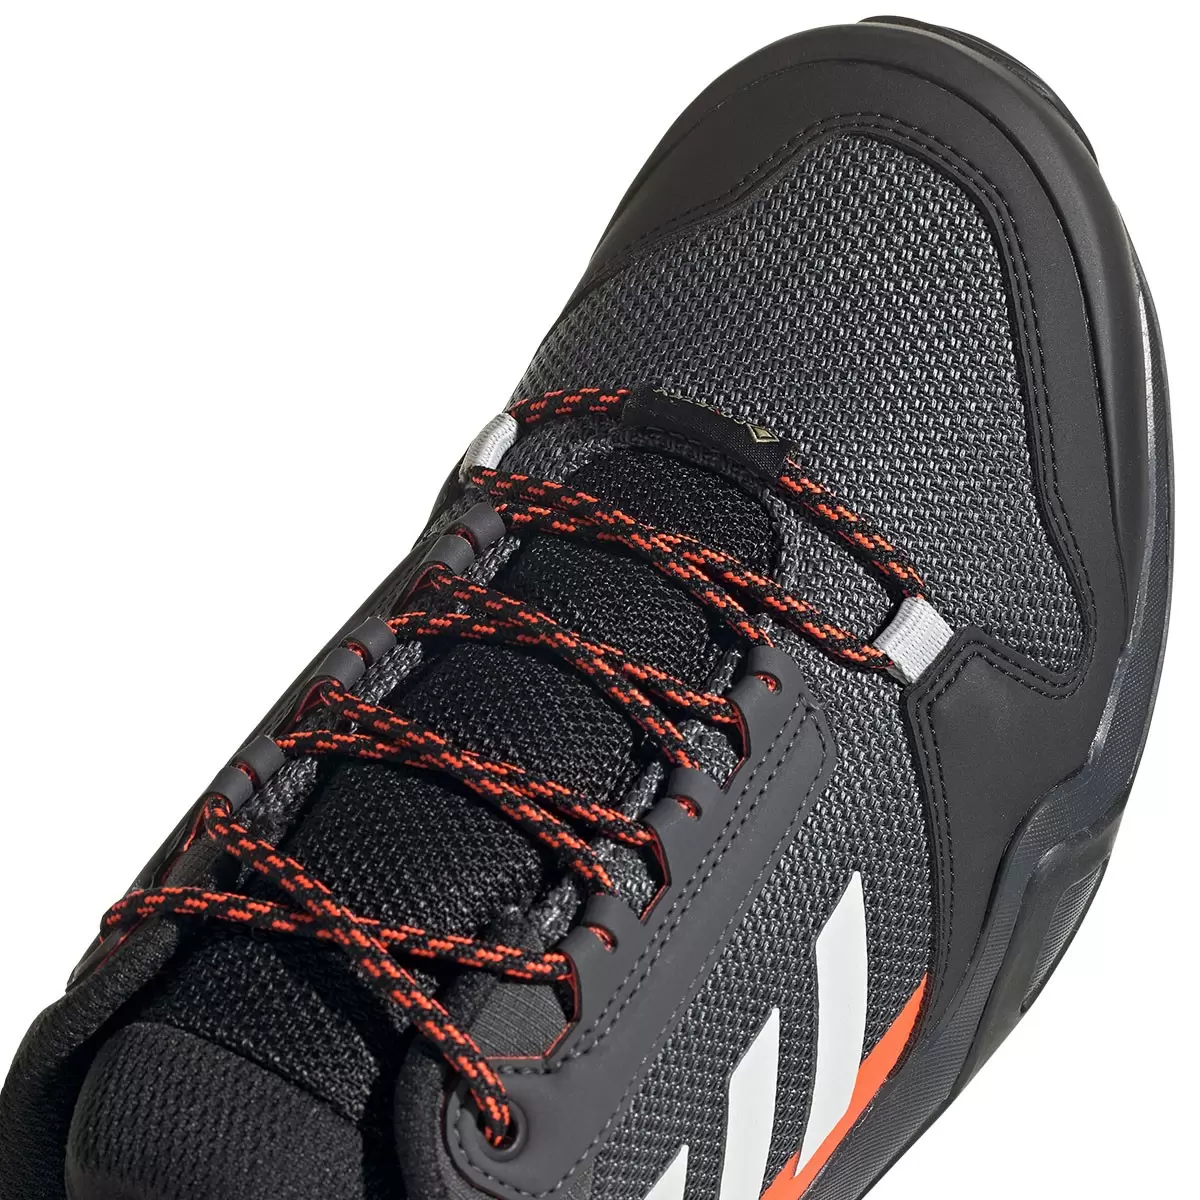 Adidas 男 Terrex 登山鞋 黑 US 10.5